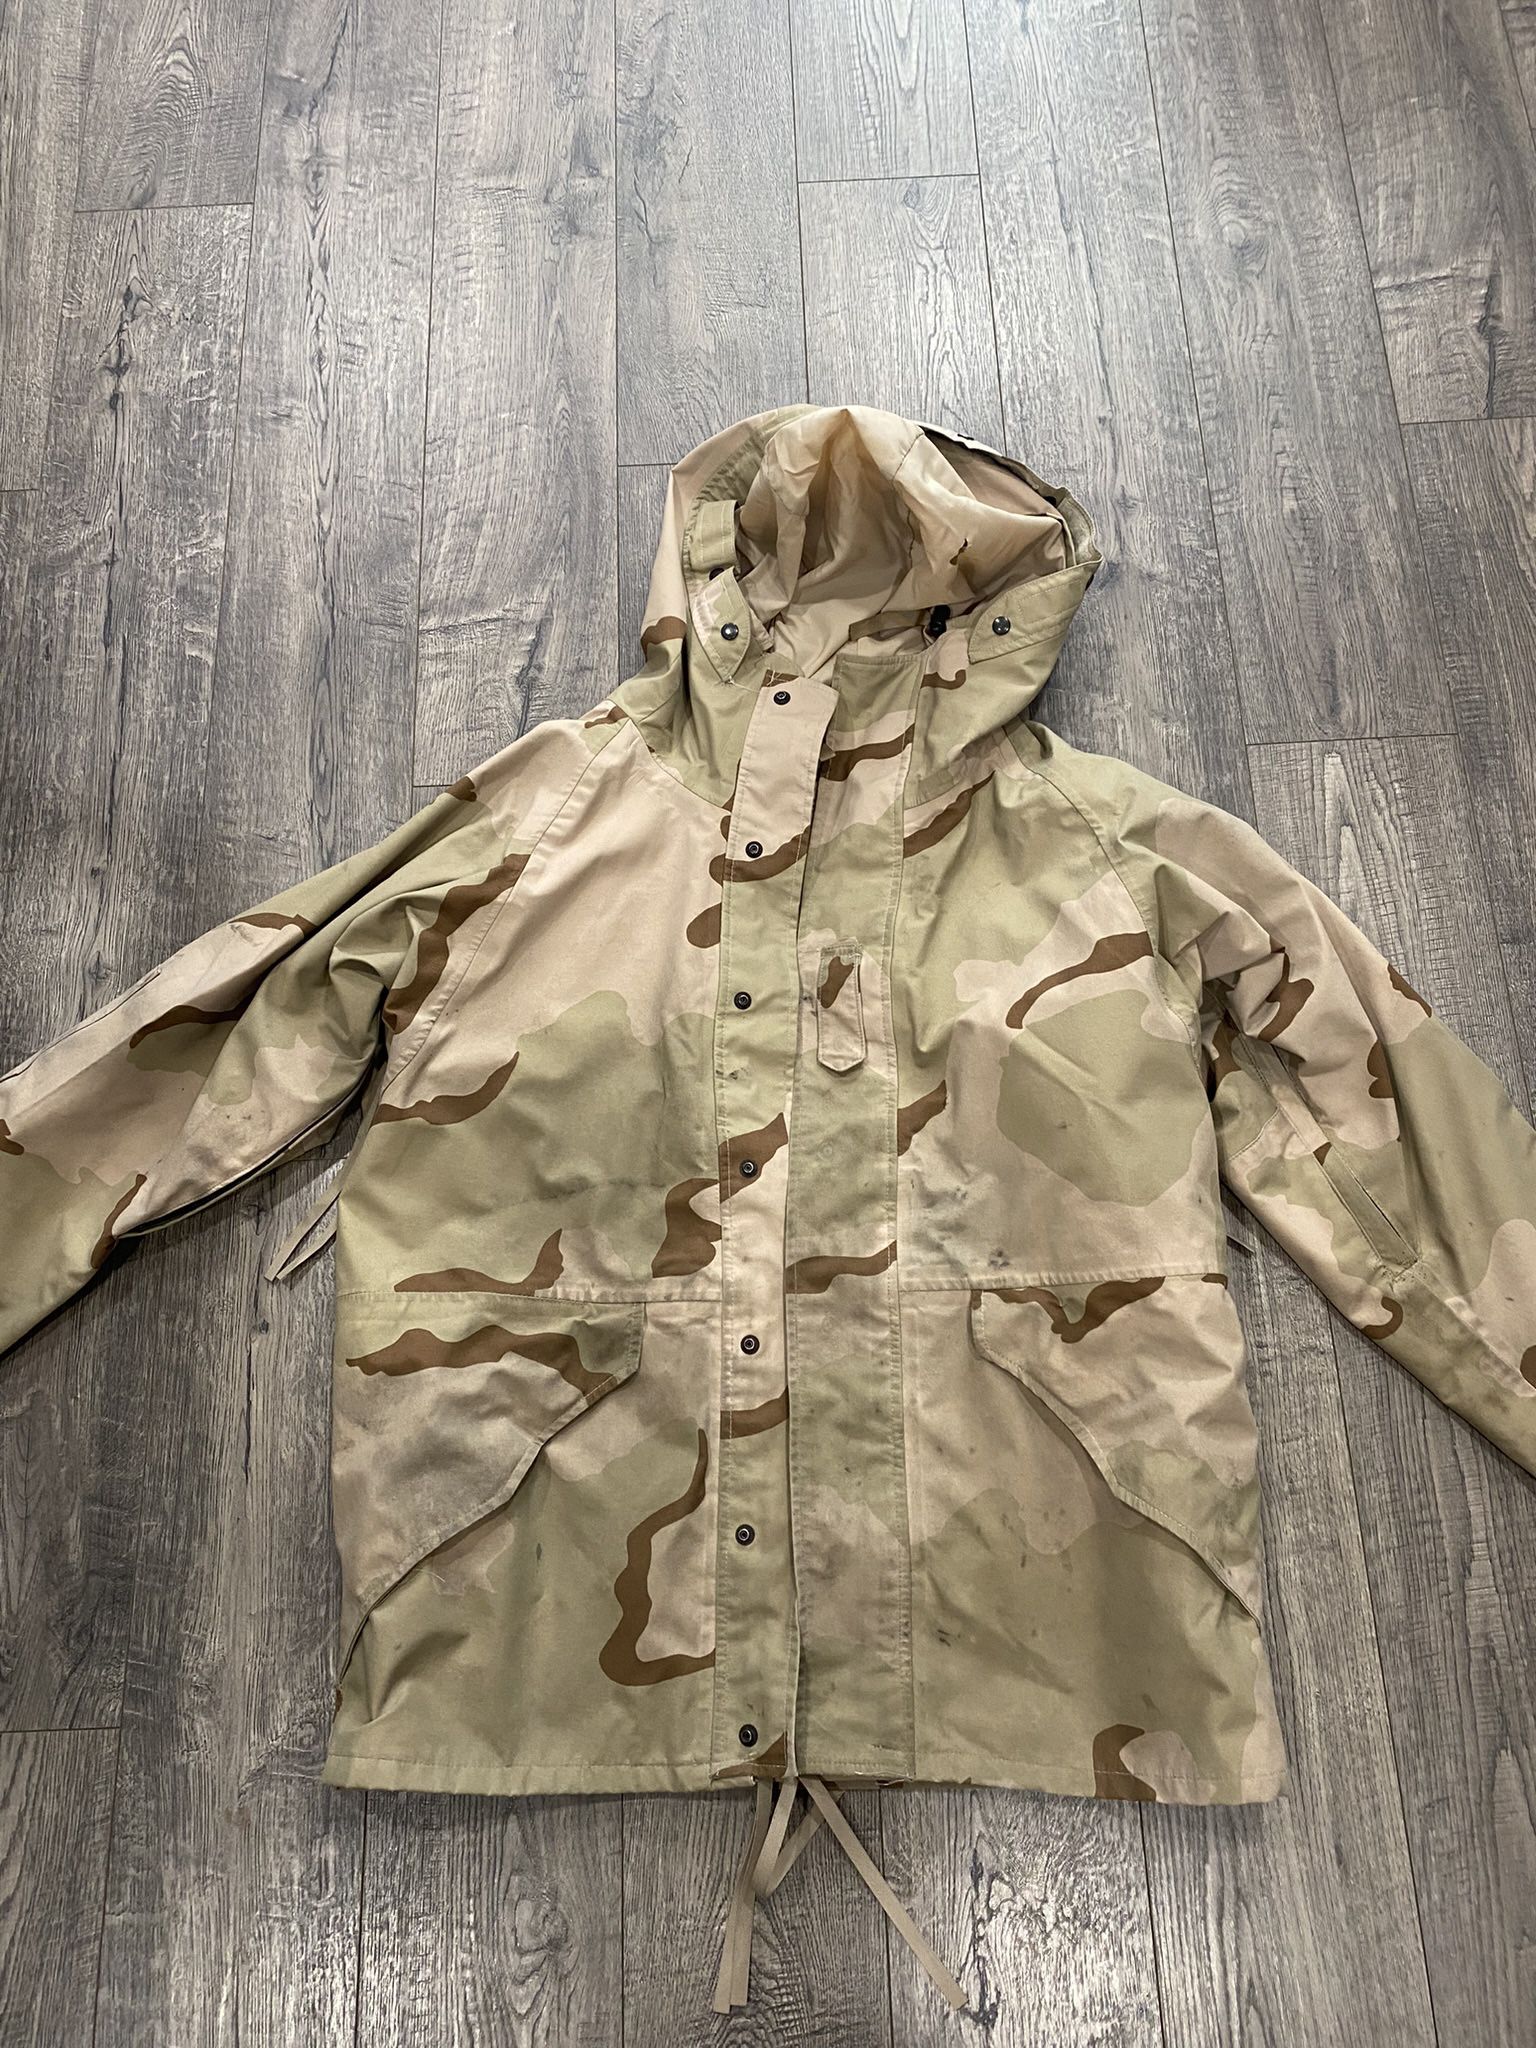 Men's Tennessee Apparel Co. Parka Cold Weather Desert Camouflage Jacket Medium